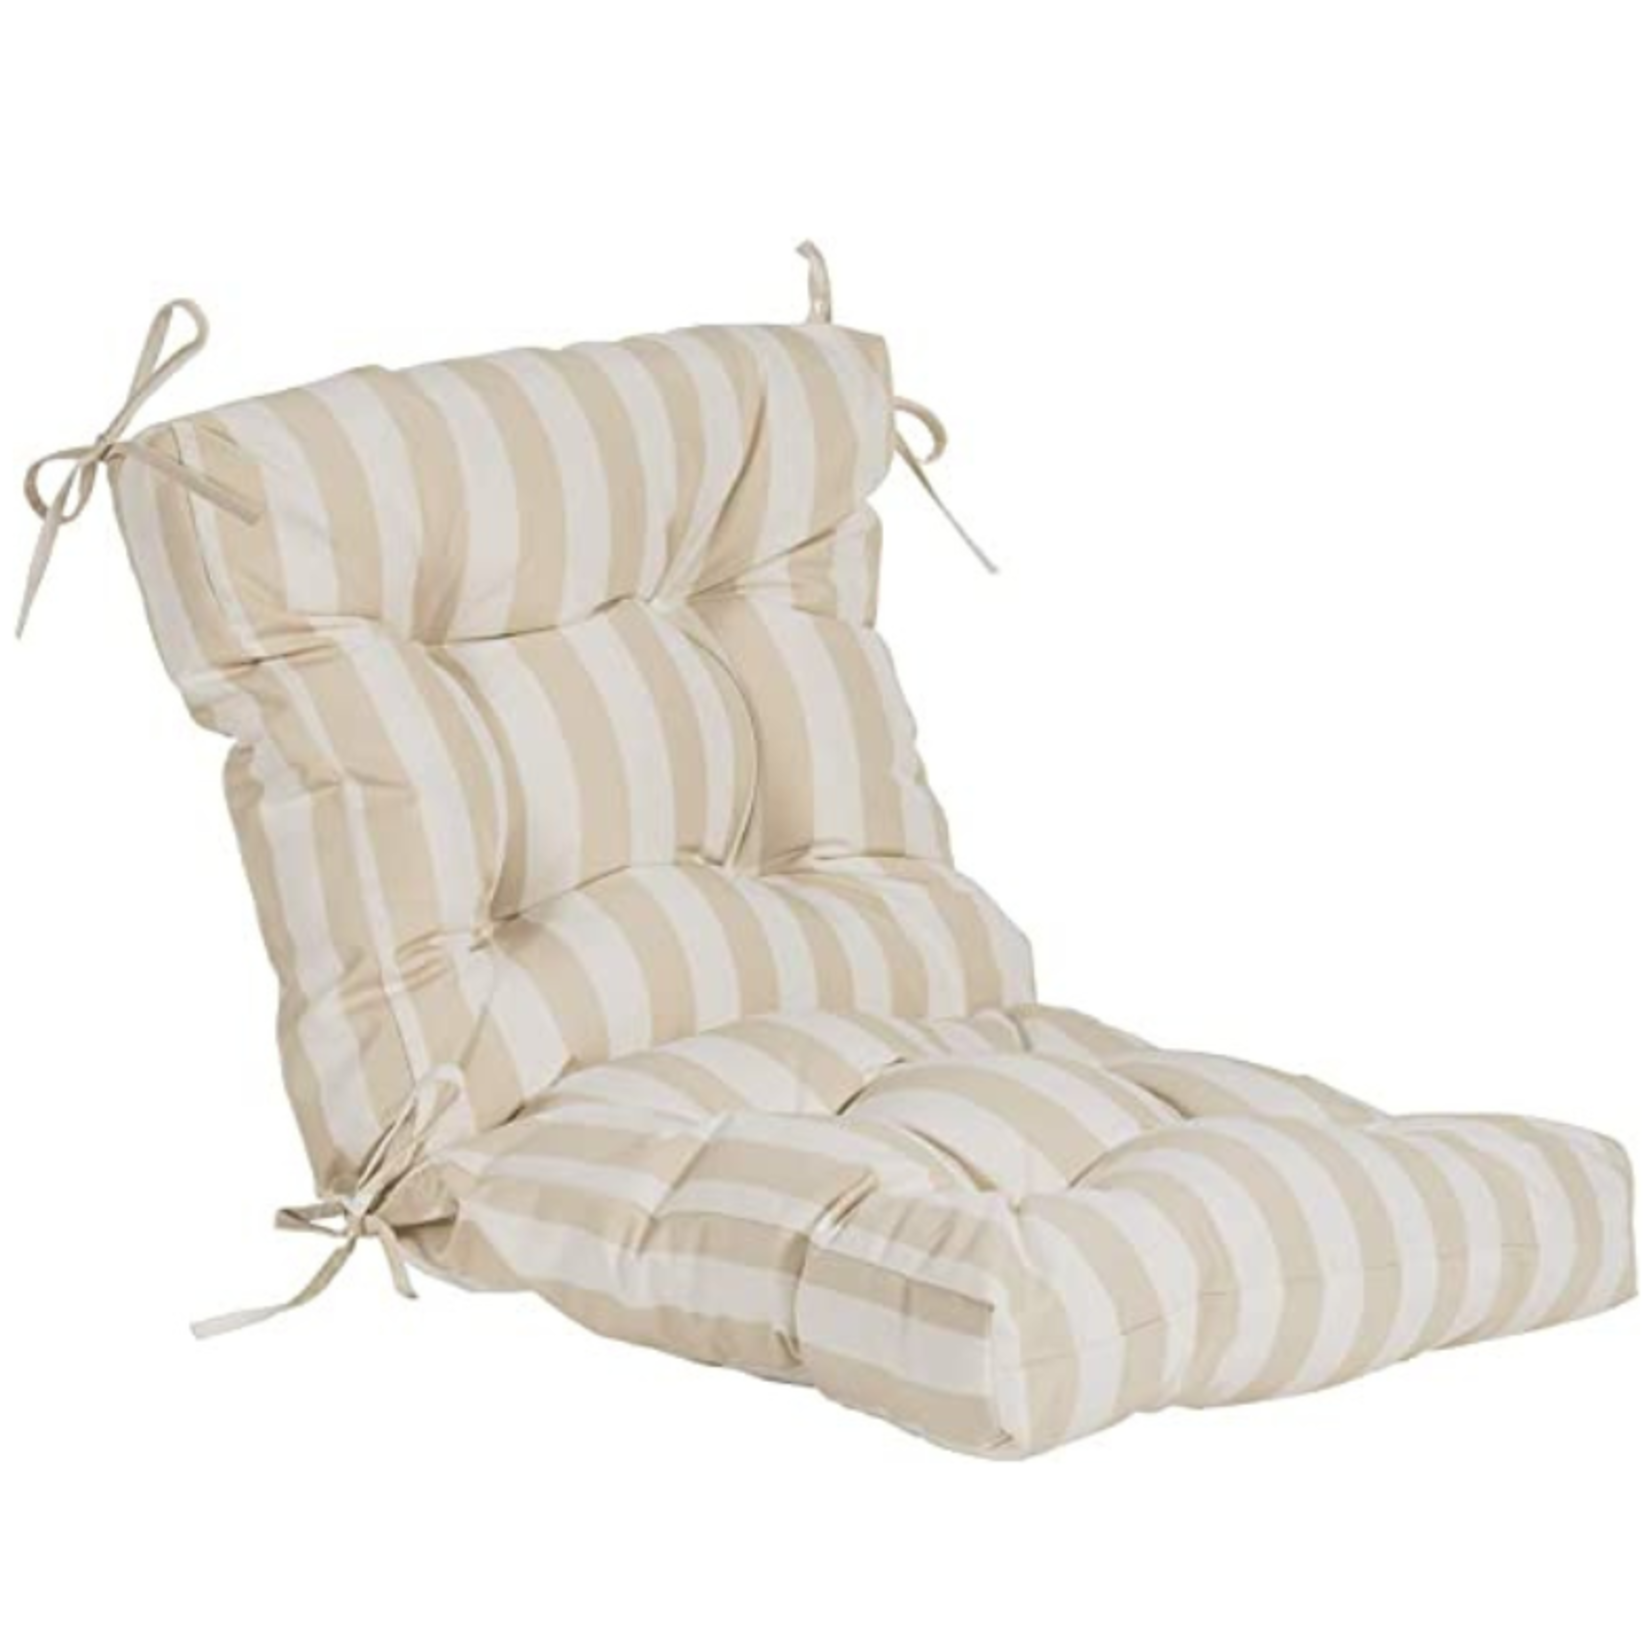 Qilloway Chair Cushion- Seat & Back- Khaki & White Stripe